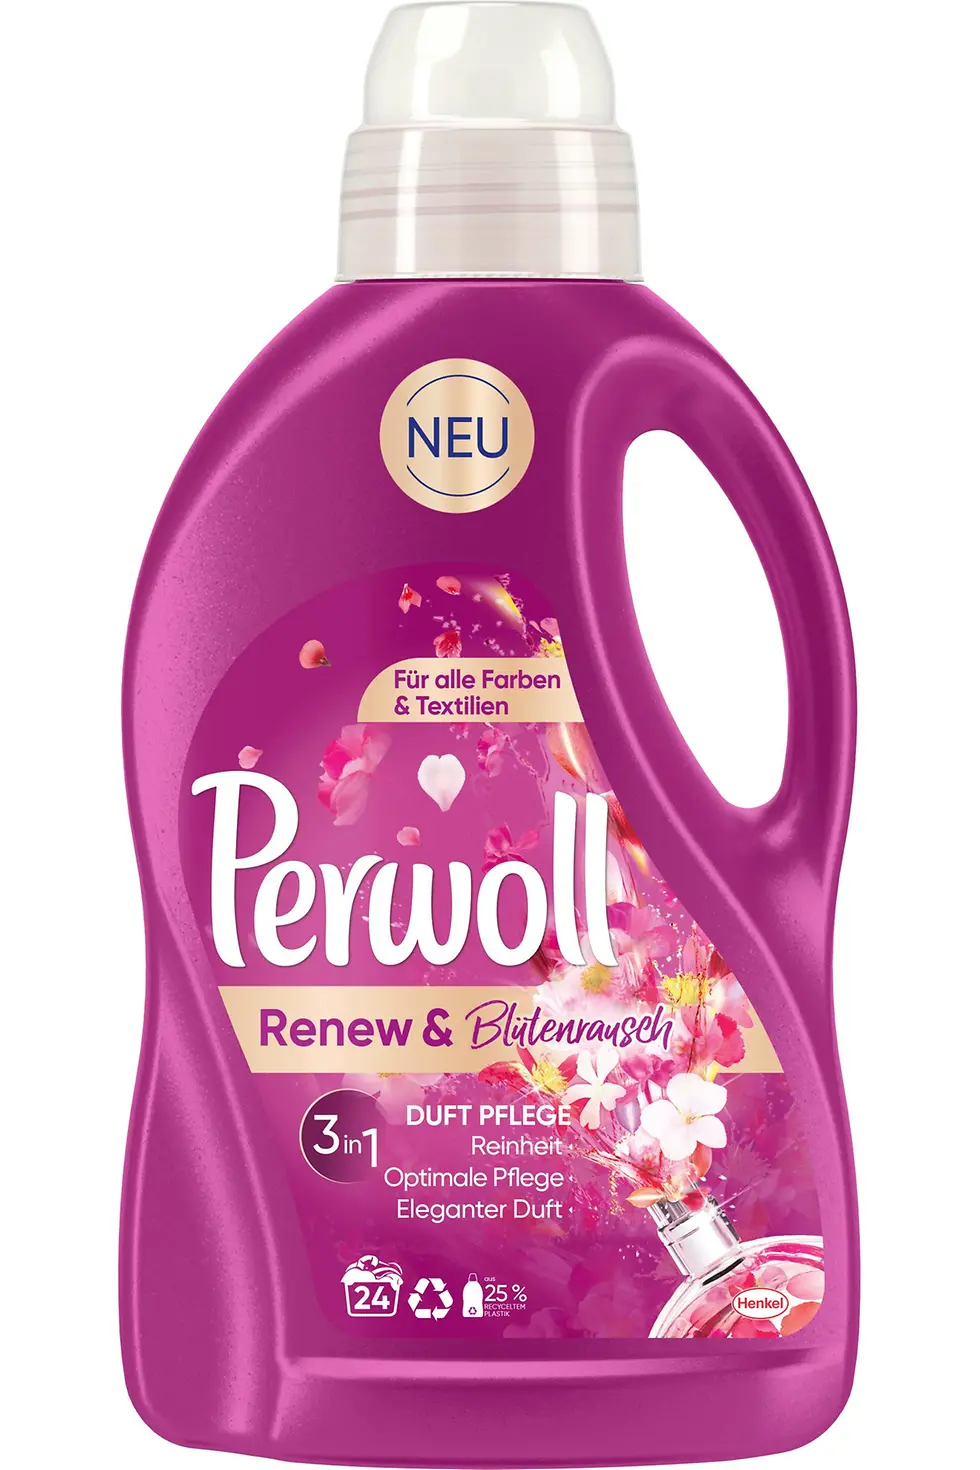 Der Perwoll Relaunch mit neuer Duftnote Renew Blütenrausch